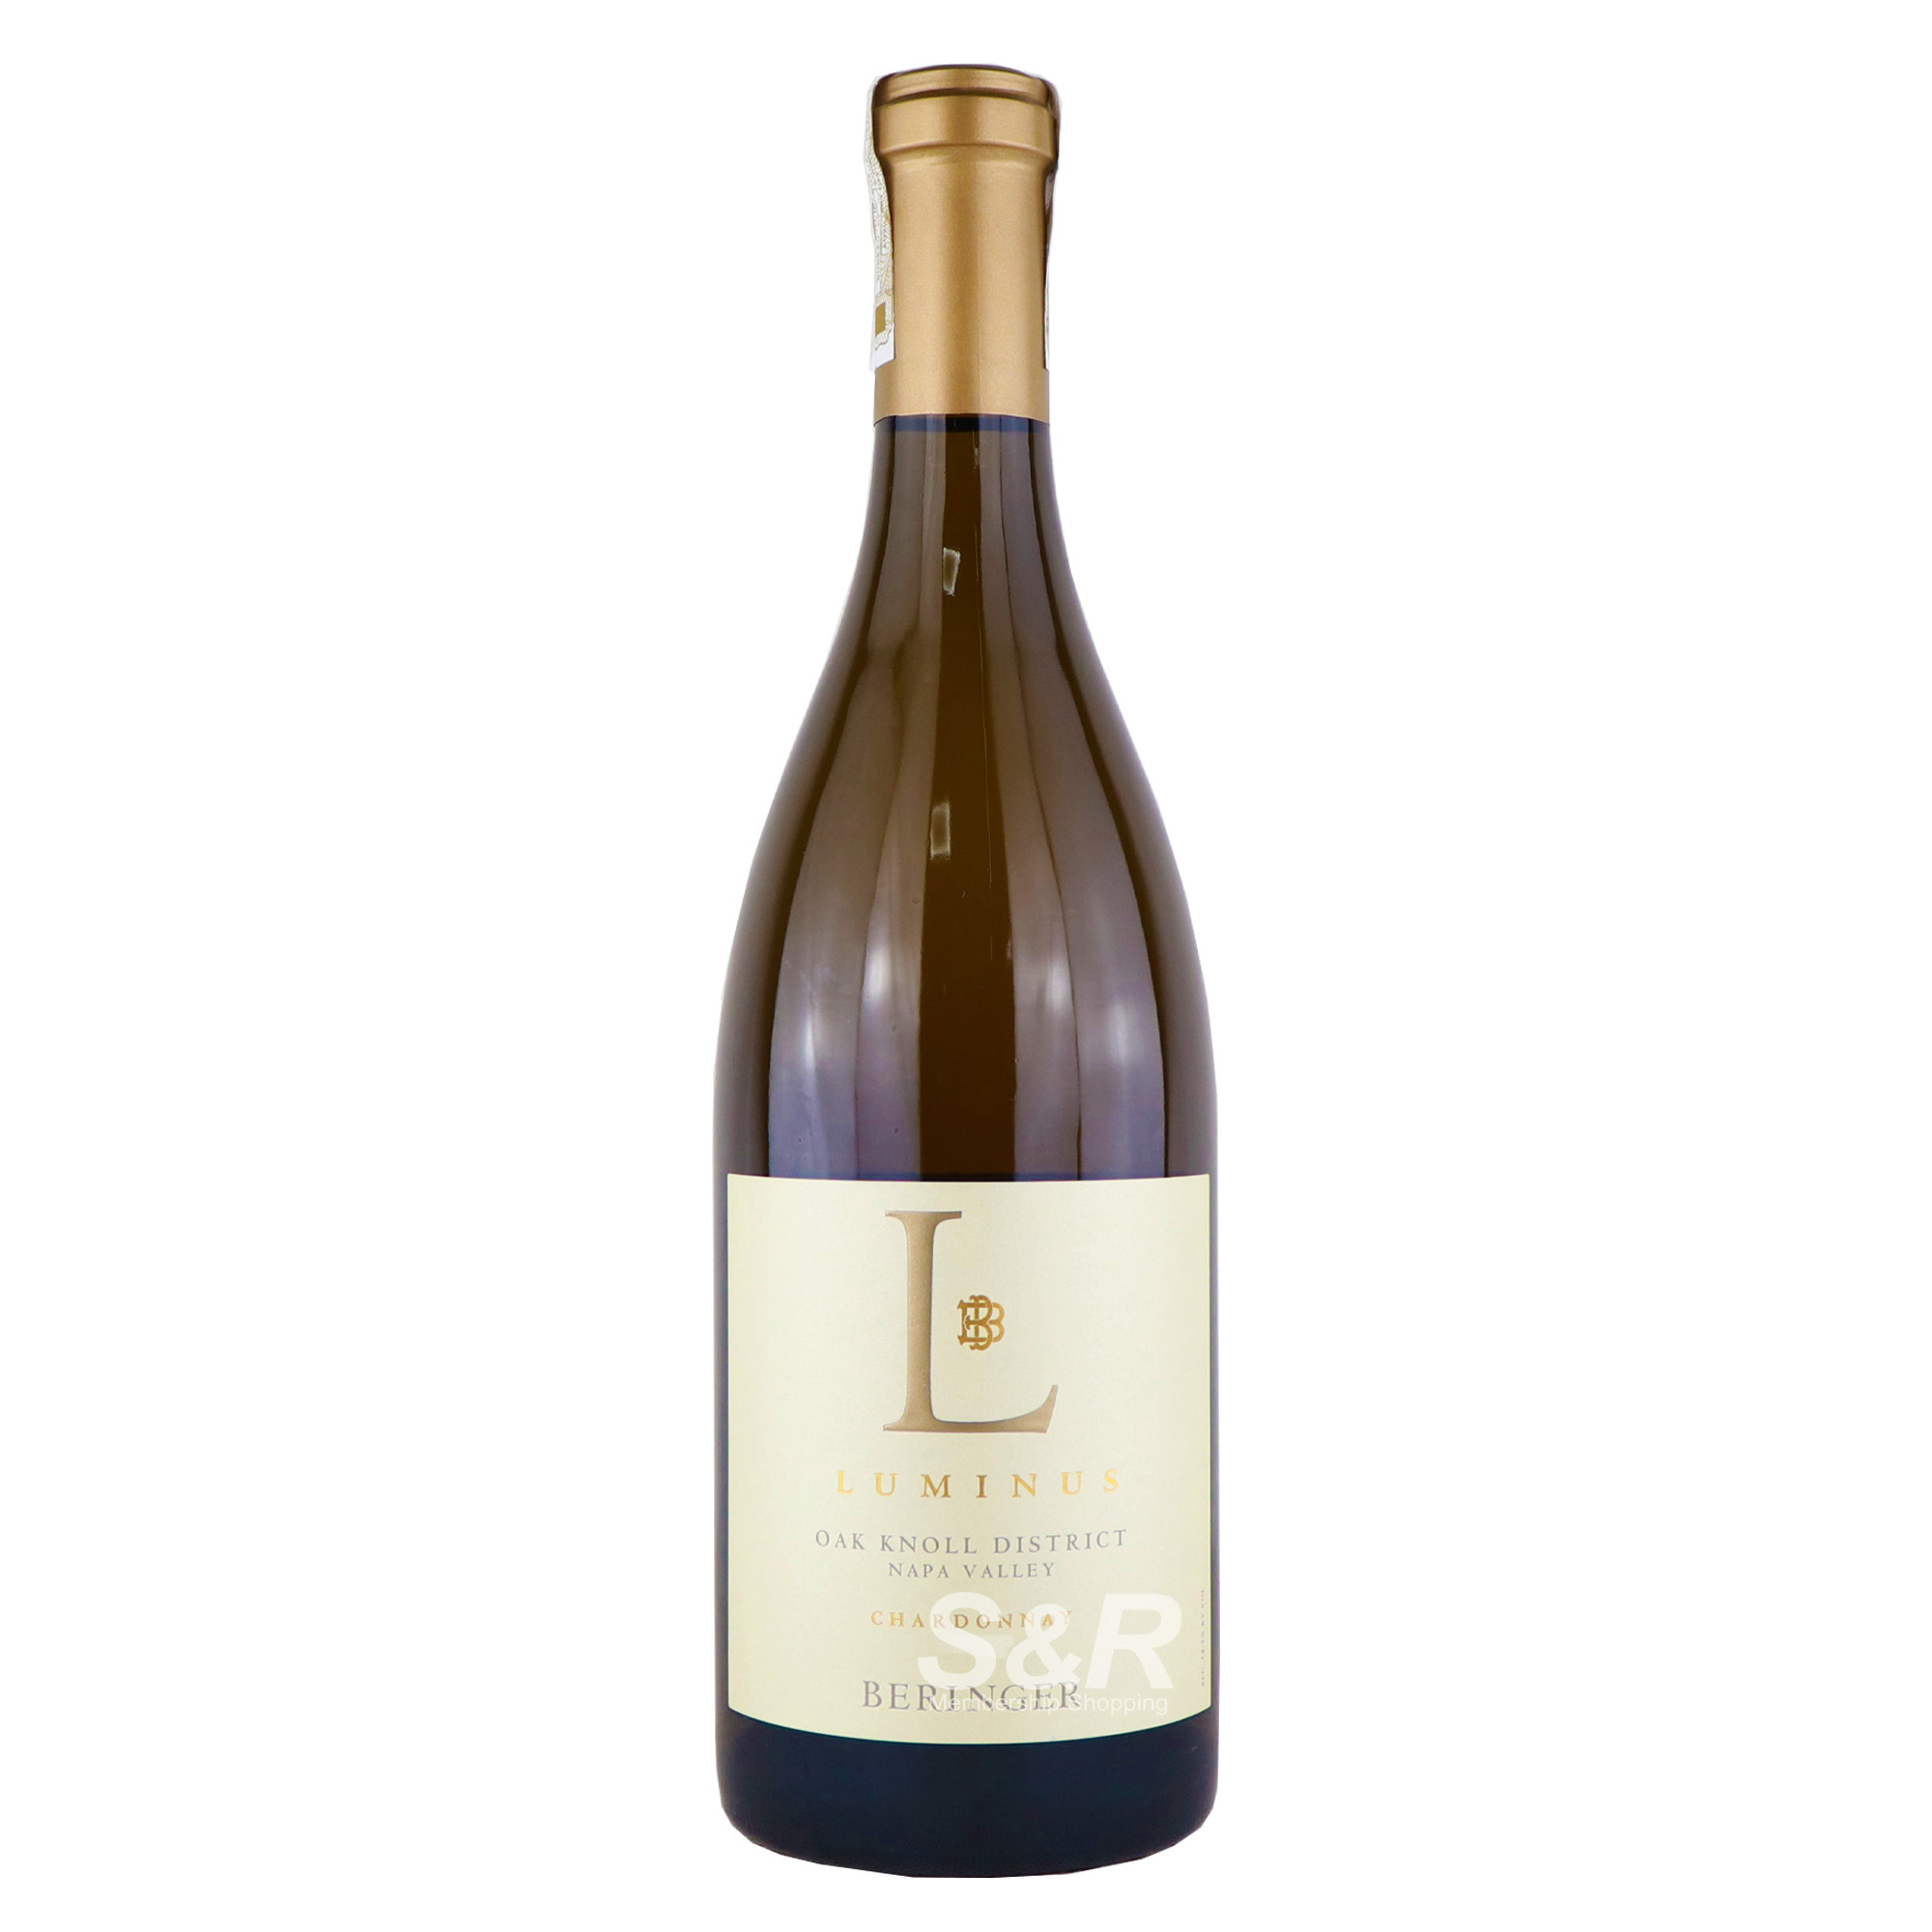 Beringer Luminus Oak Knoll District Chardonnay Wine 750mL